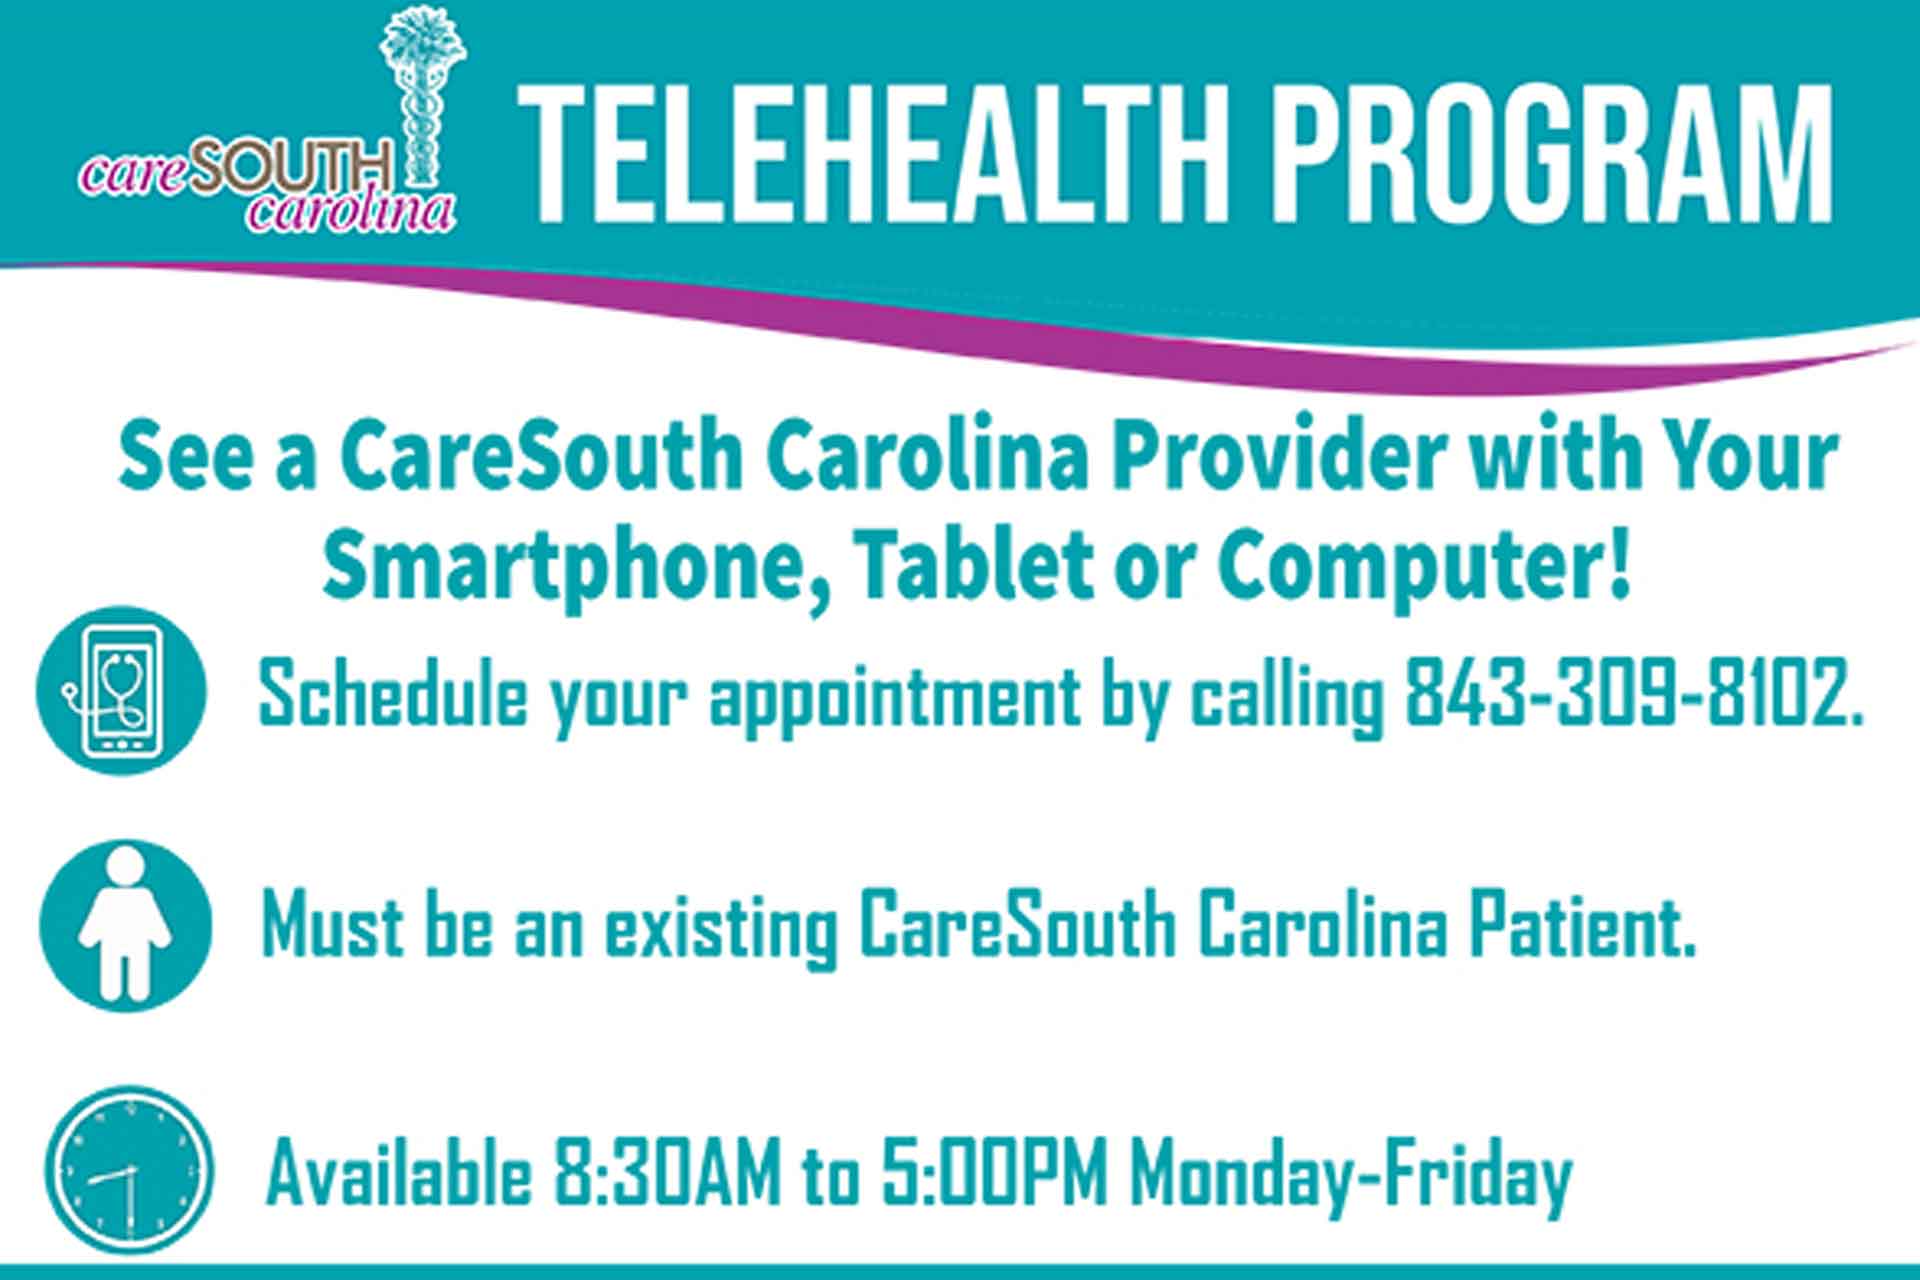 Telehealth Program from CareSouth Carolina